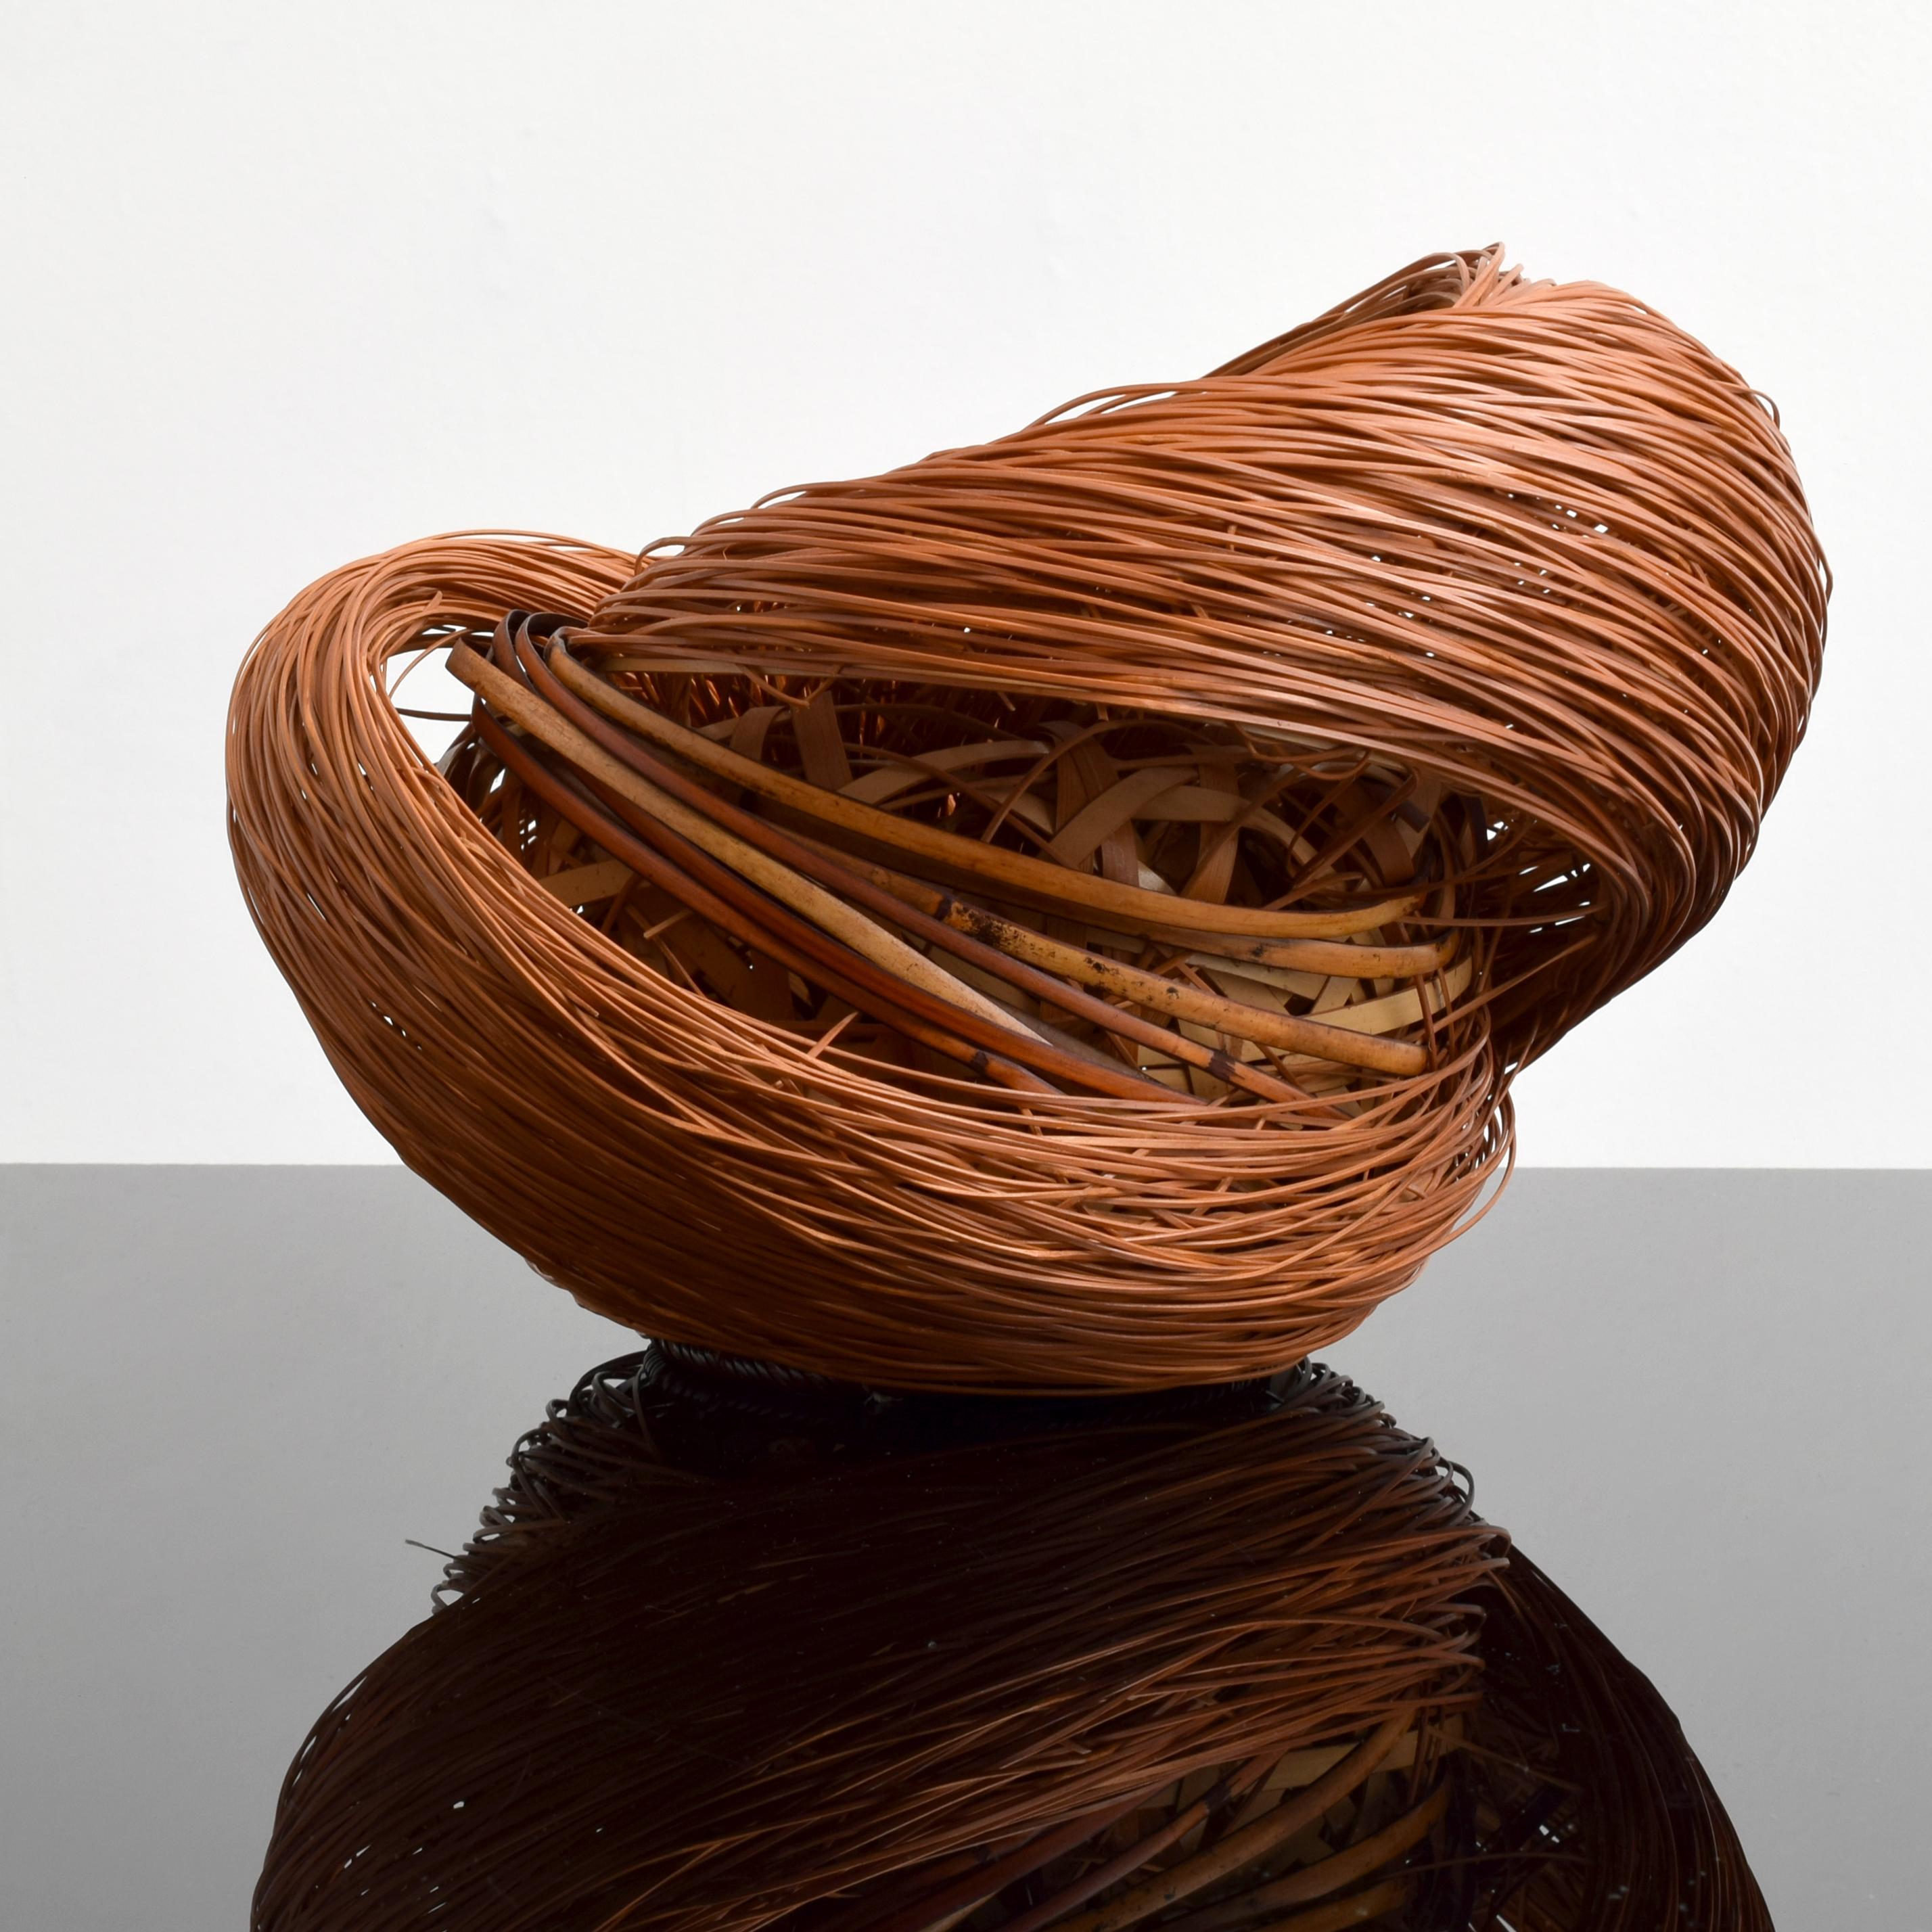  Monden Kogyoku “Flower of Wave” Sculpture For Sale 5